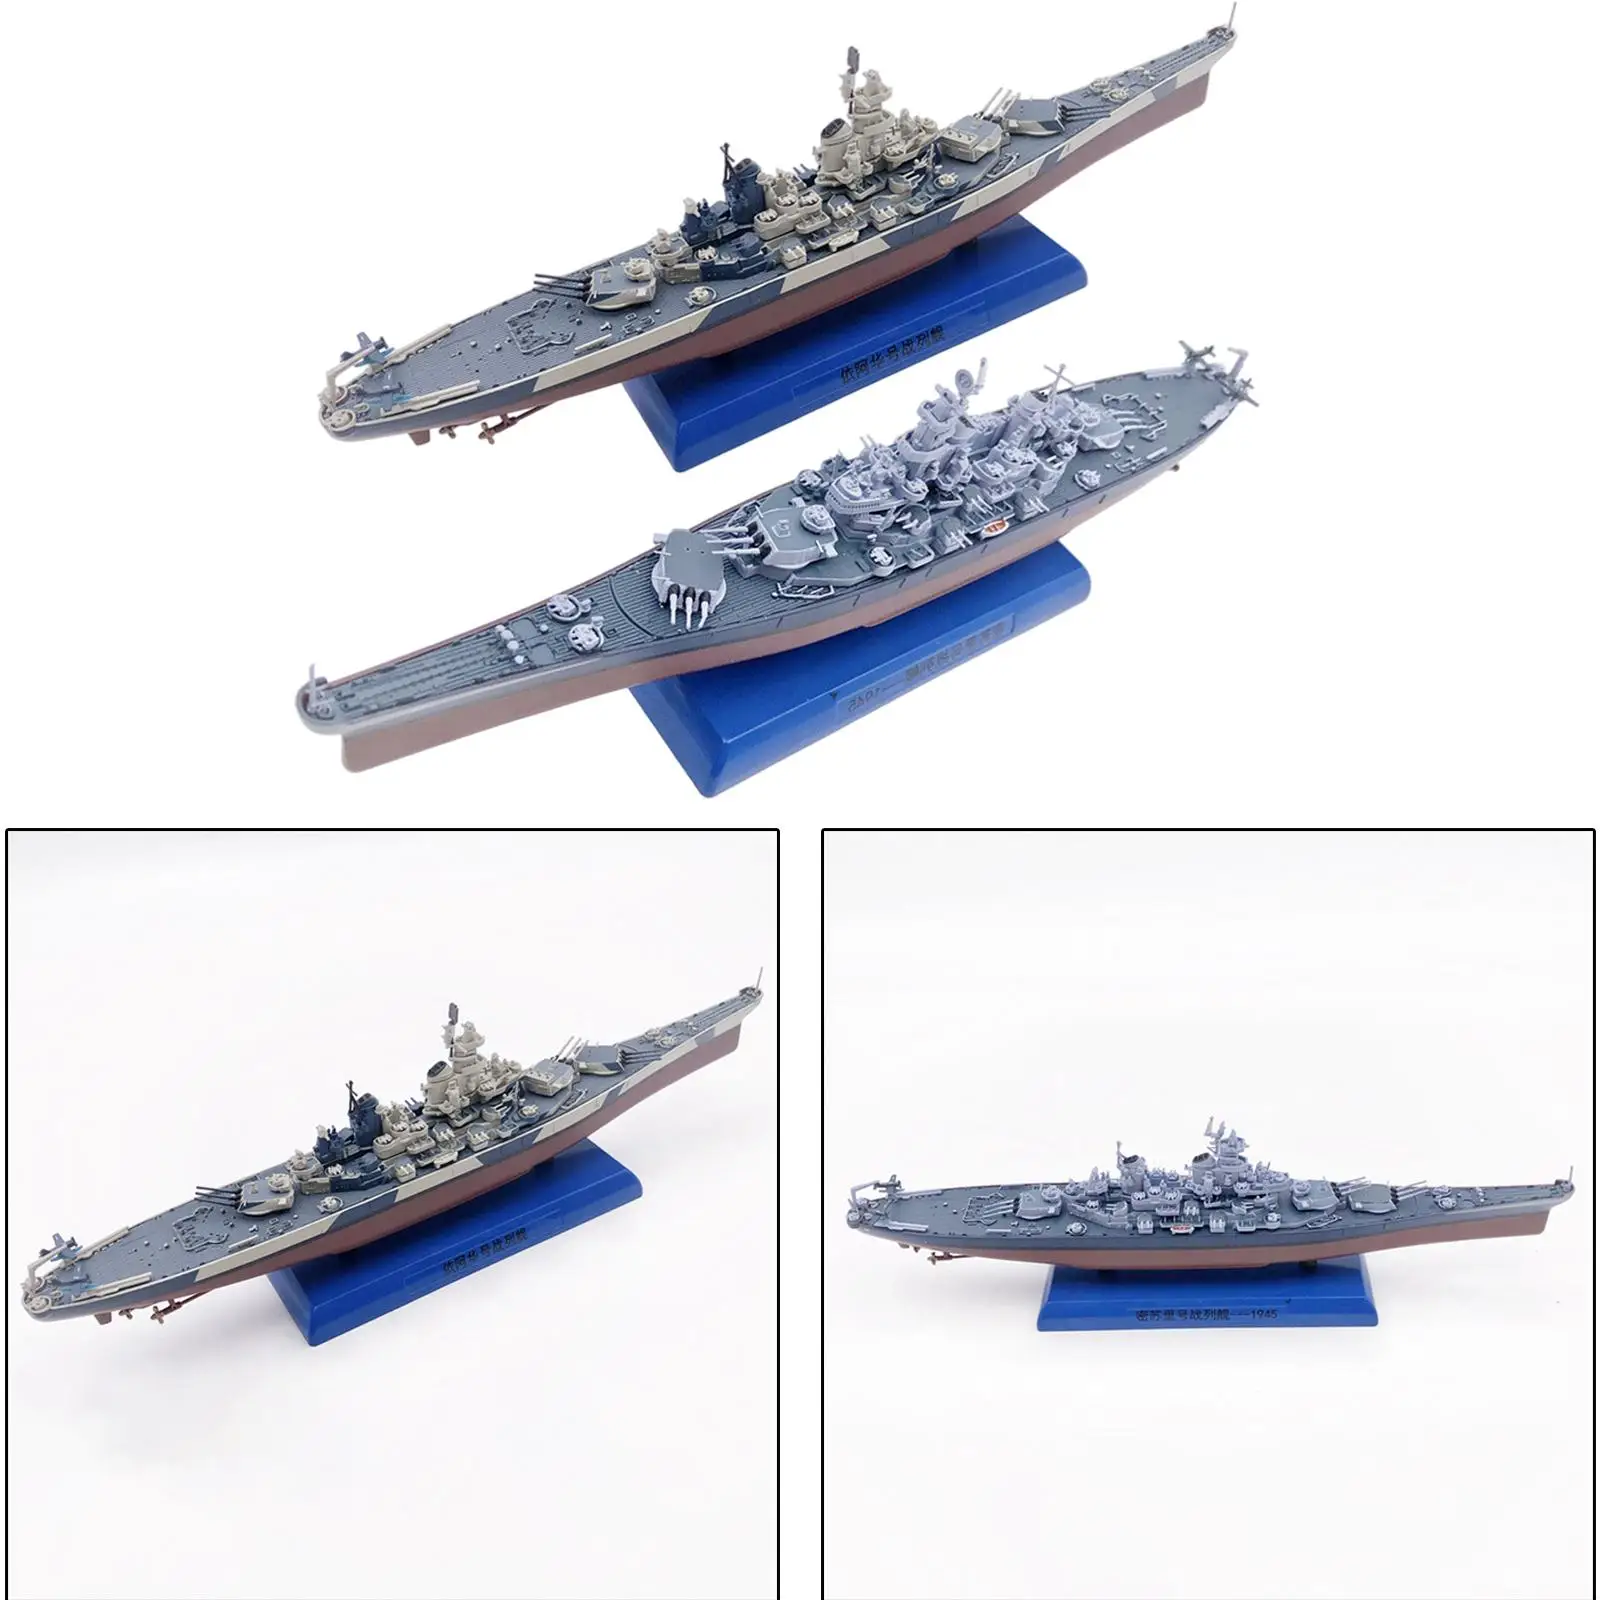 United States 1/1000 Boats Ships Model Alloy Display Table Keepsake